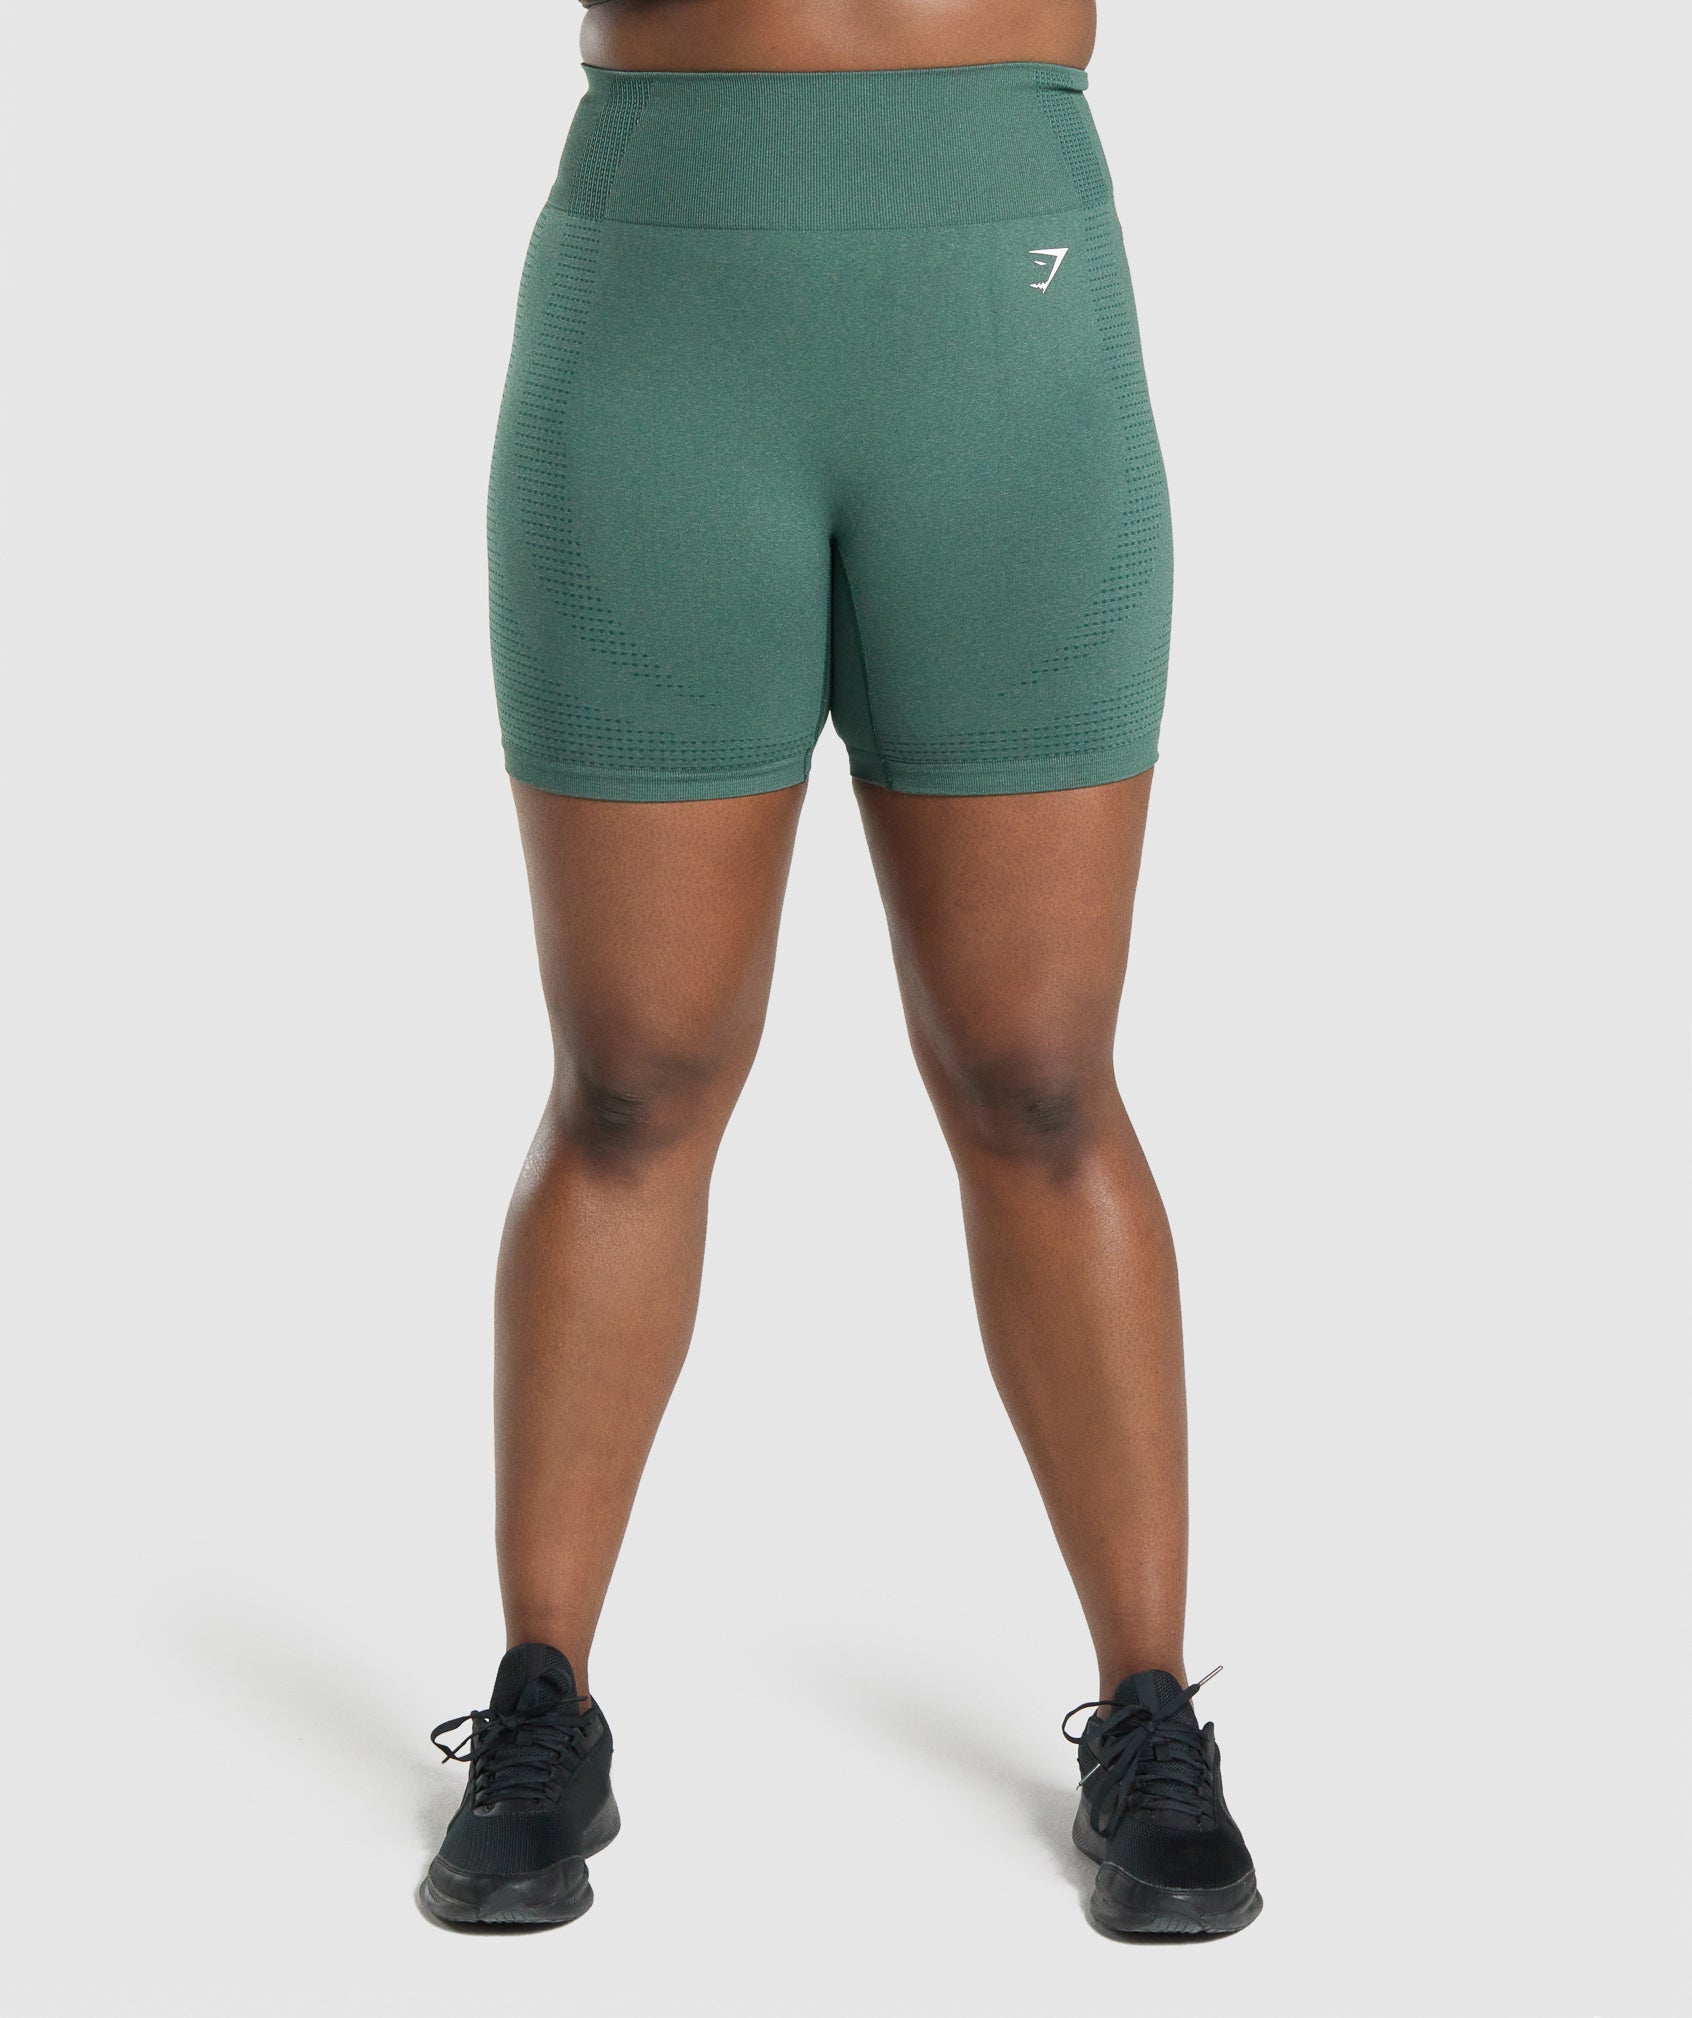 Women's Seamless Shorts & Workout Shorts – Gymshark